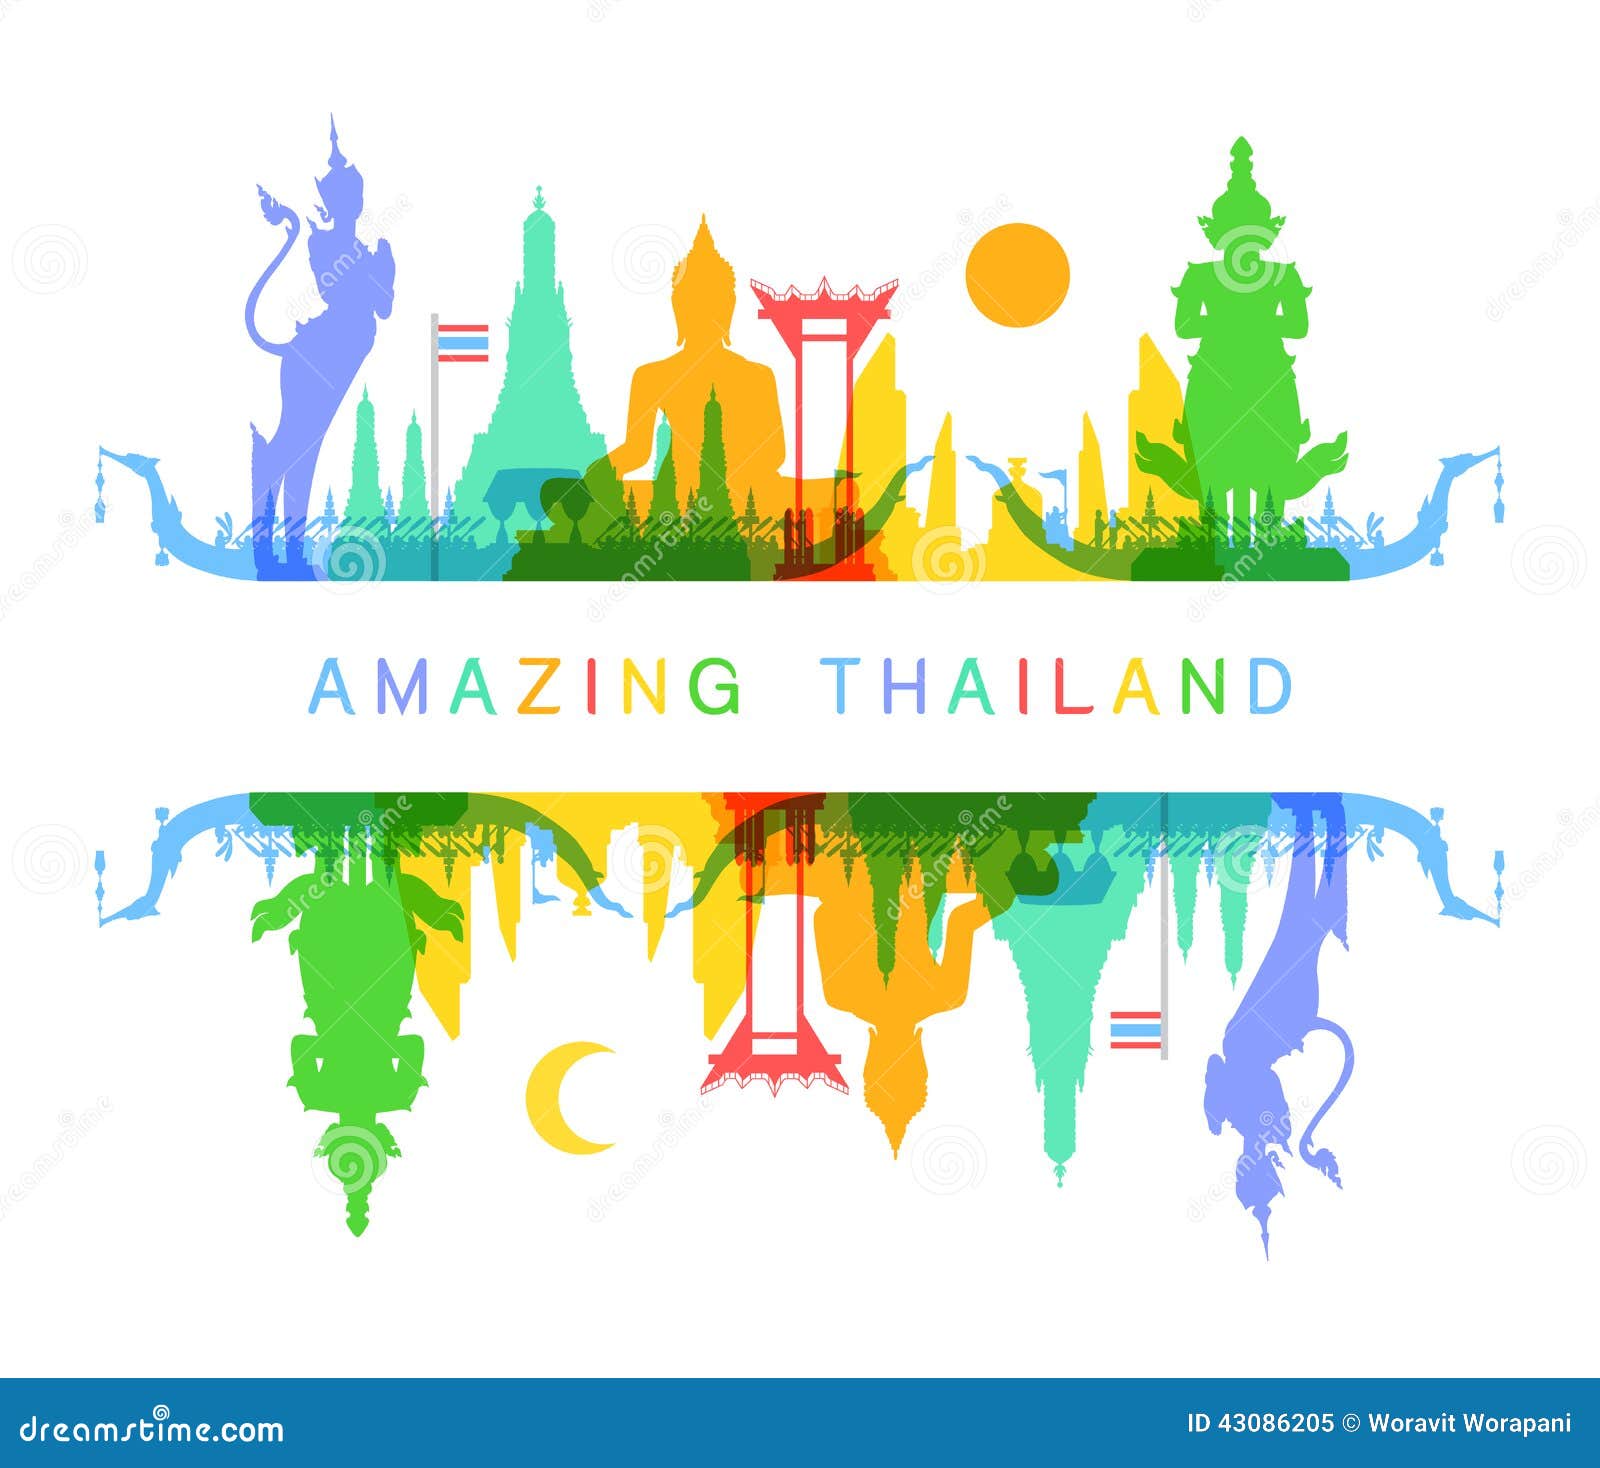 clipart thailand map - photo #44